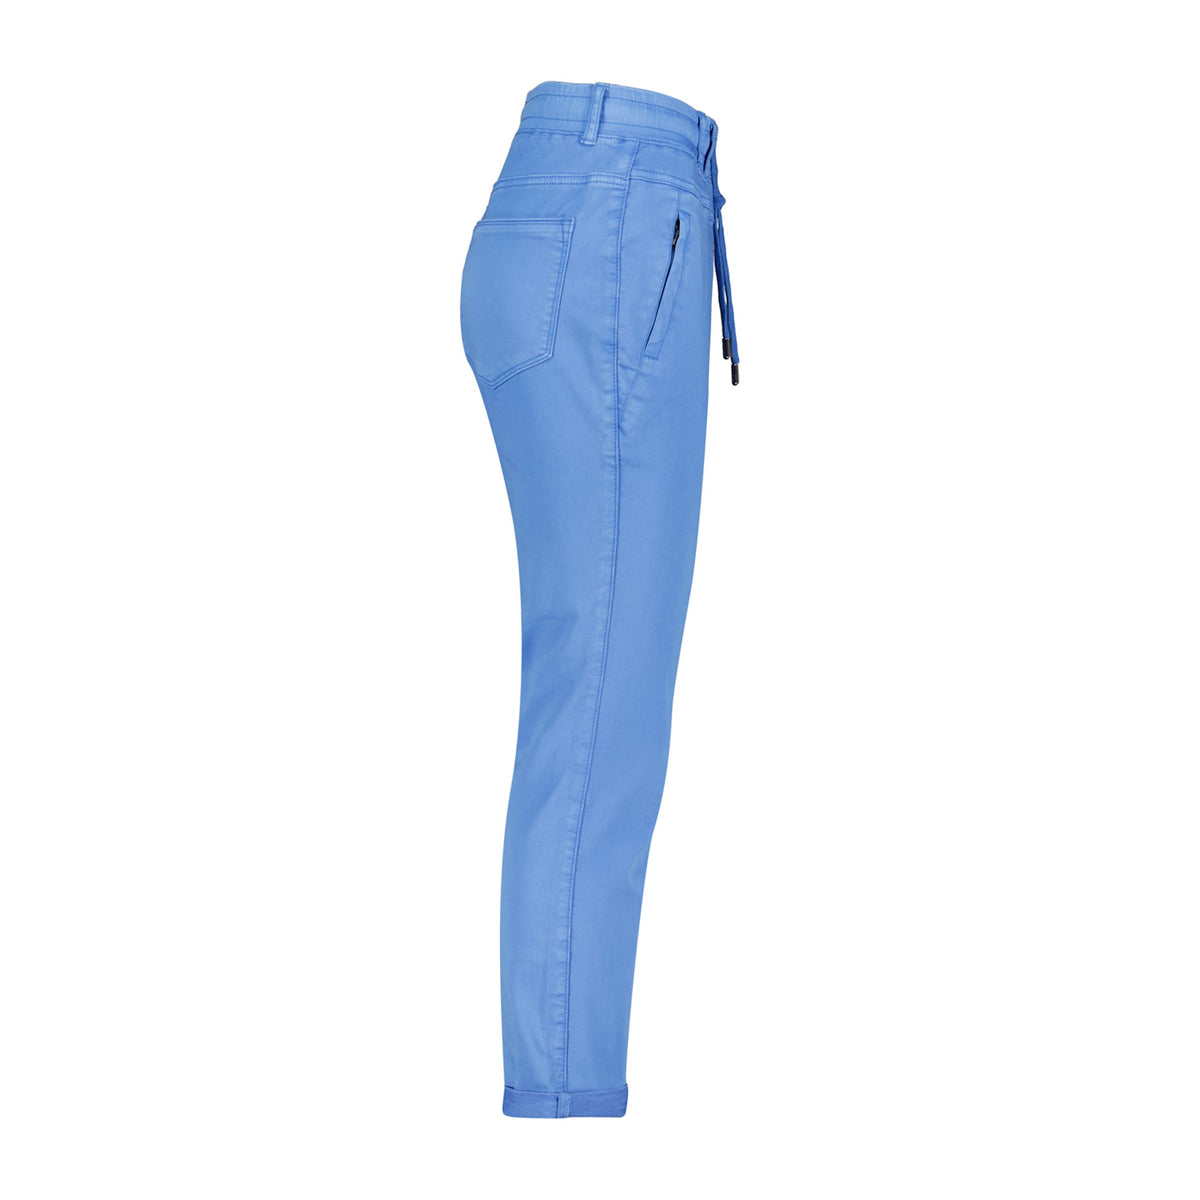 SRB4154 Pantalon de jogging Tessy à boutons rouges, bleu moyen, cheville